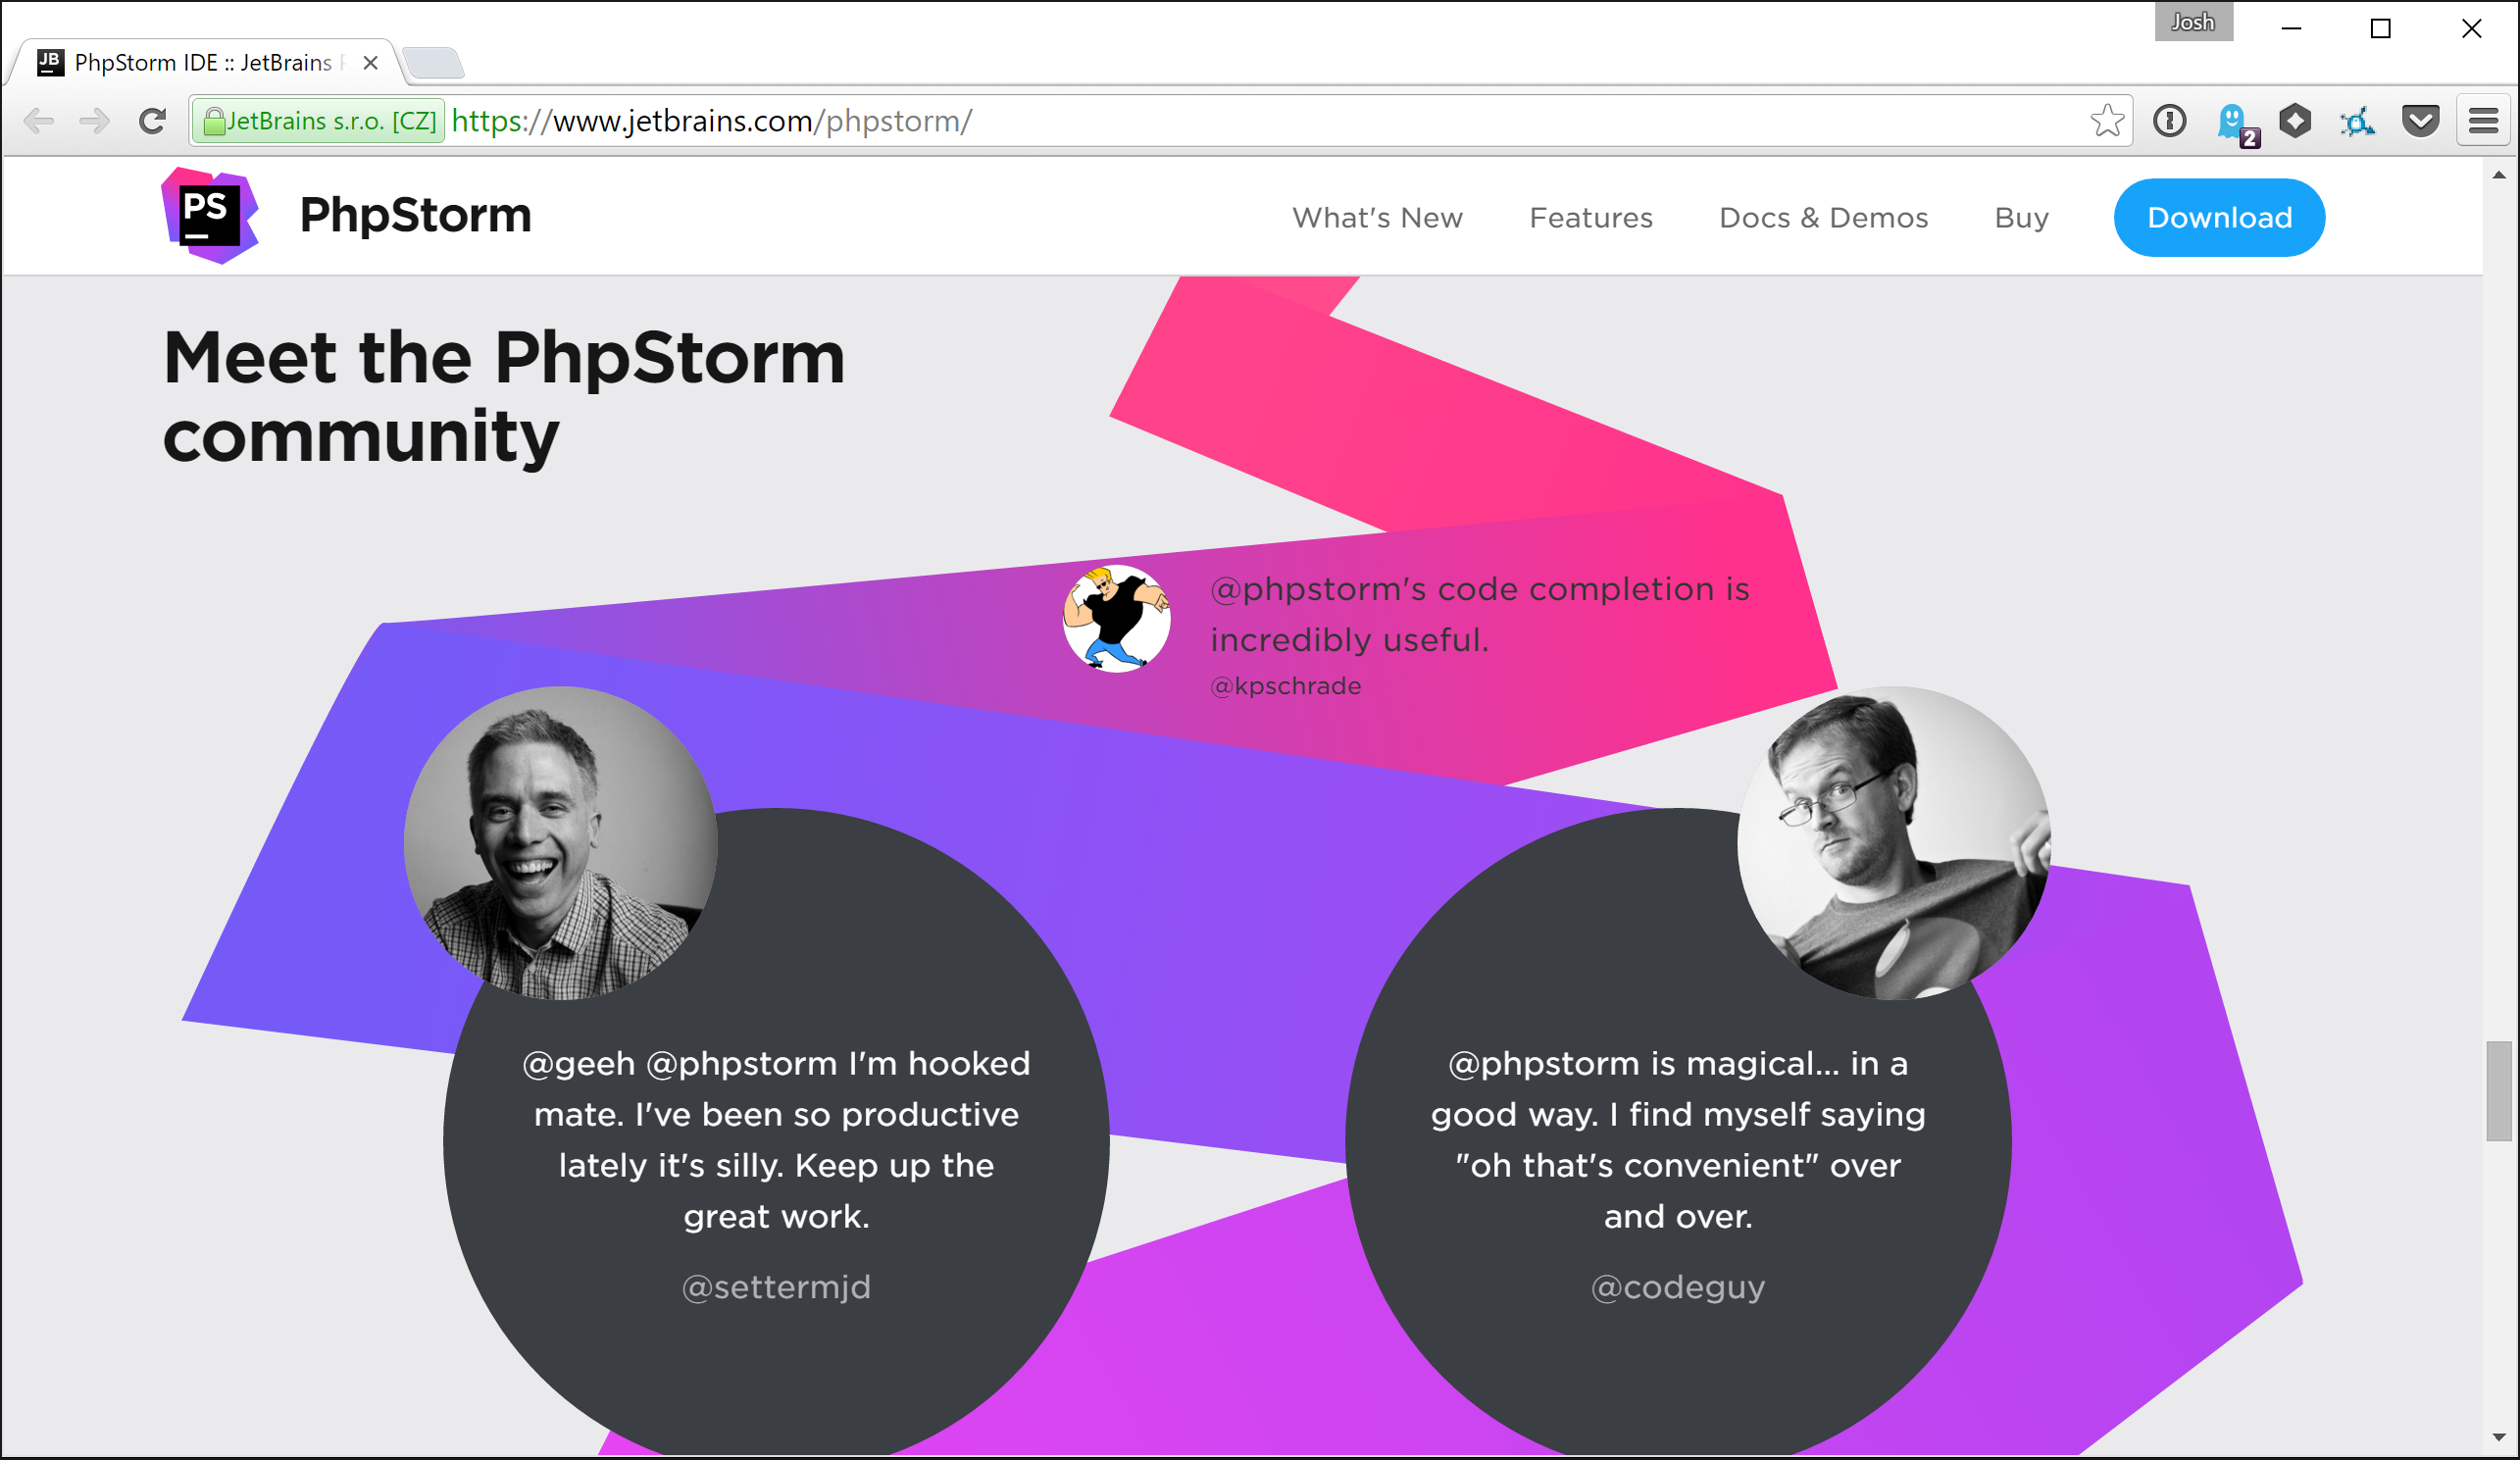 PHPStorm website with @codeguy testimonial